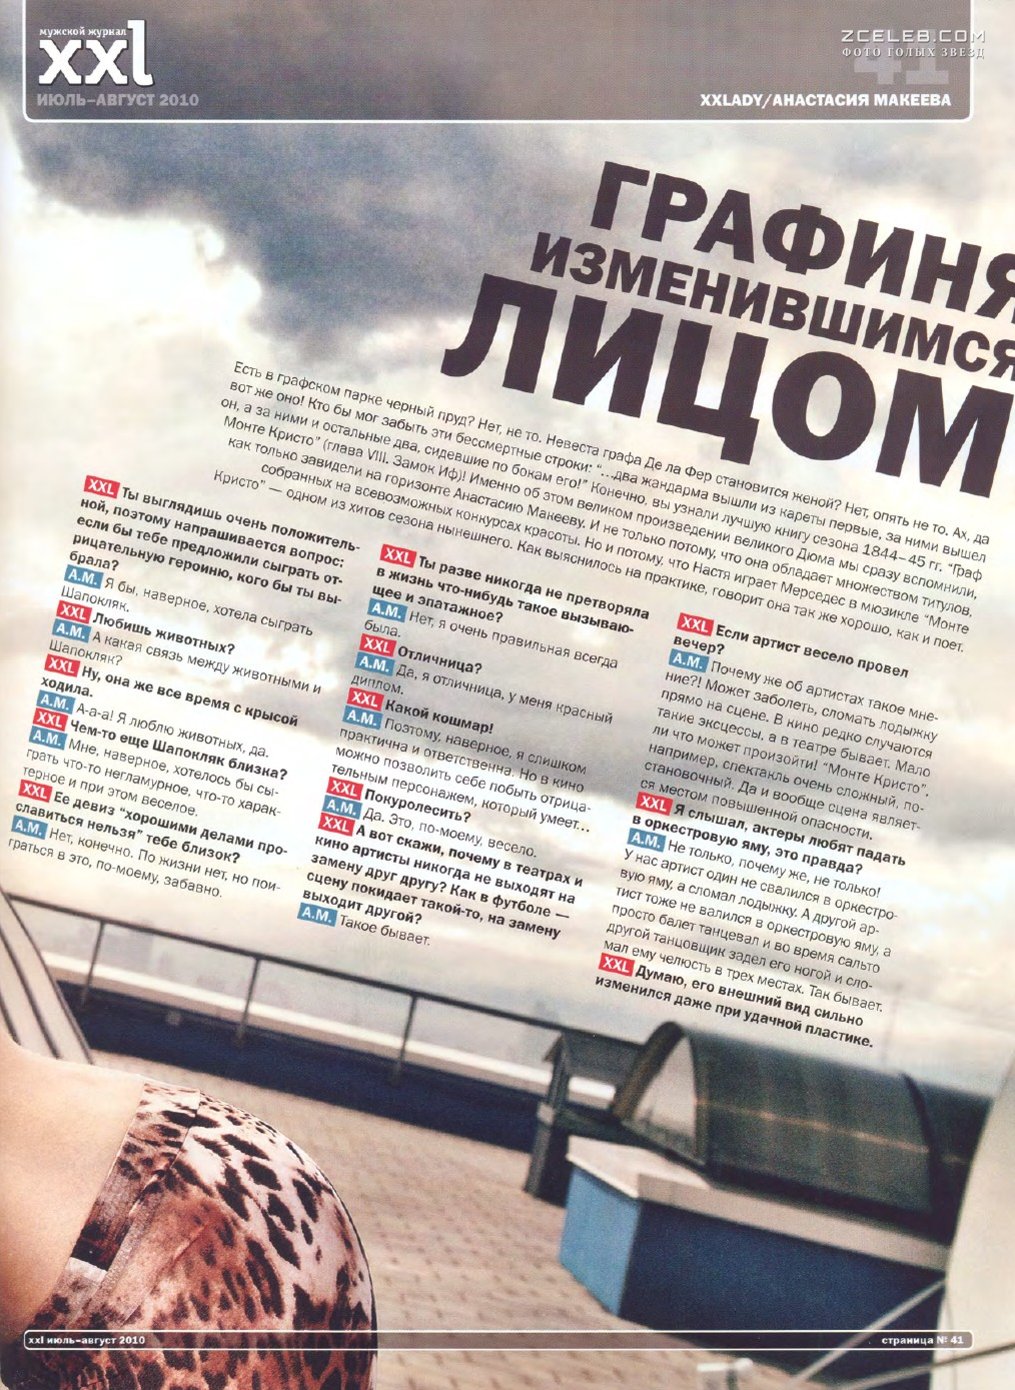 Анастасия Макеева обнажилась для журнала XXL, 2010 / ZCELEB.COM